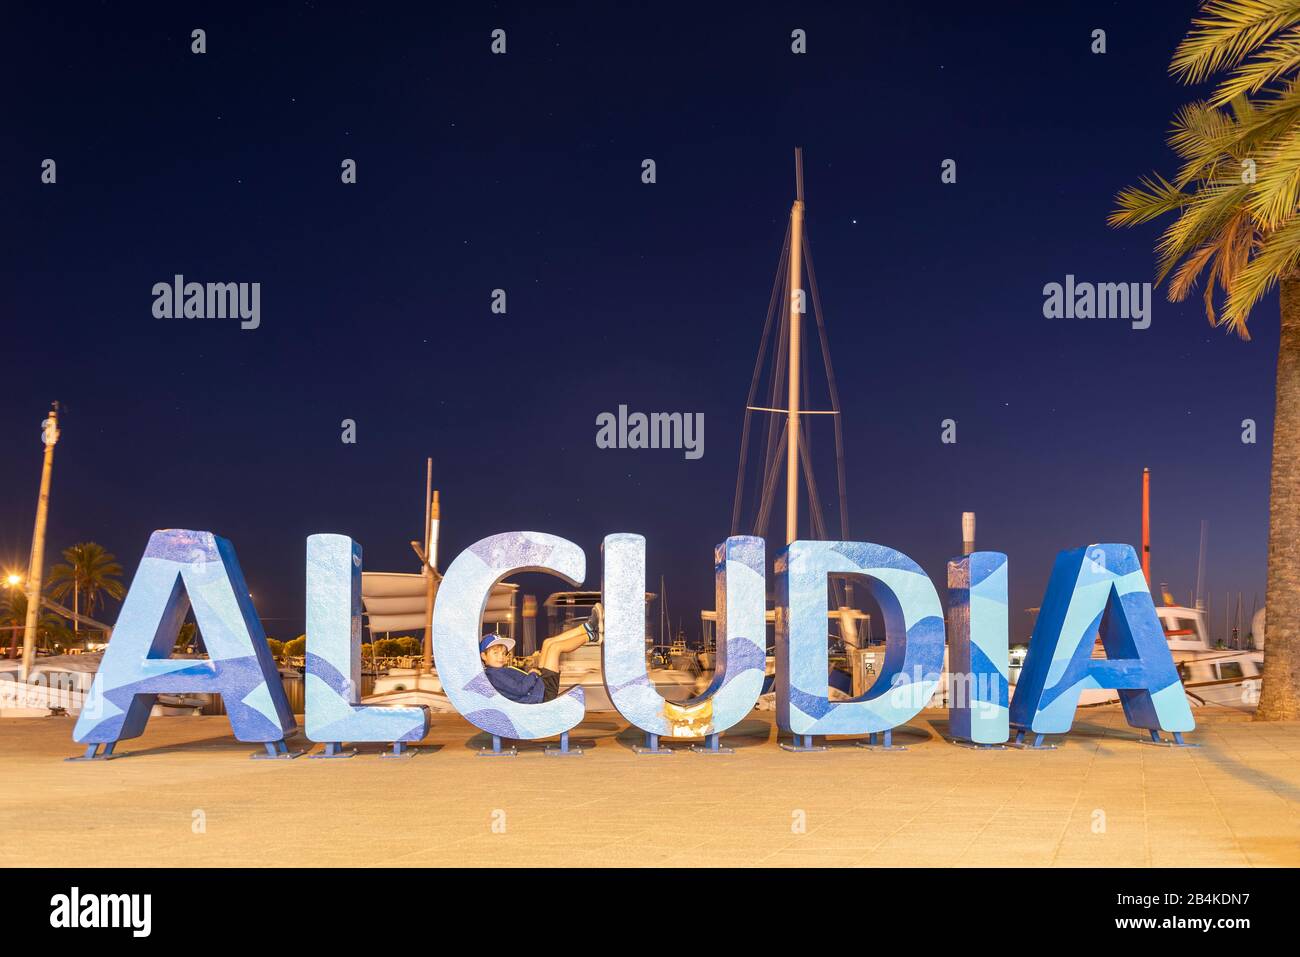 Spain, Mallorca, Allcúdia, boy lies in the letter C of the lettering Allcúdia, Port de Alcúdia Port in the north of the Mediterranean island of Mallorca. Stock Photo